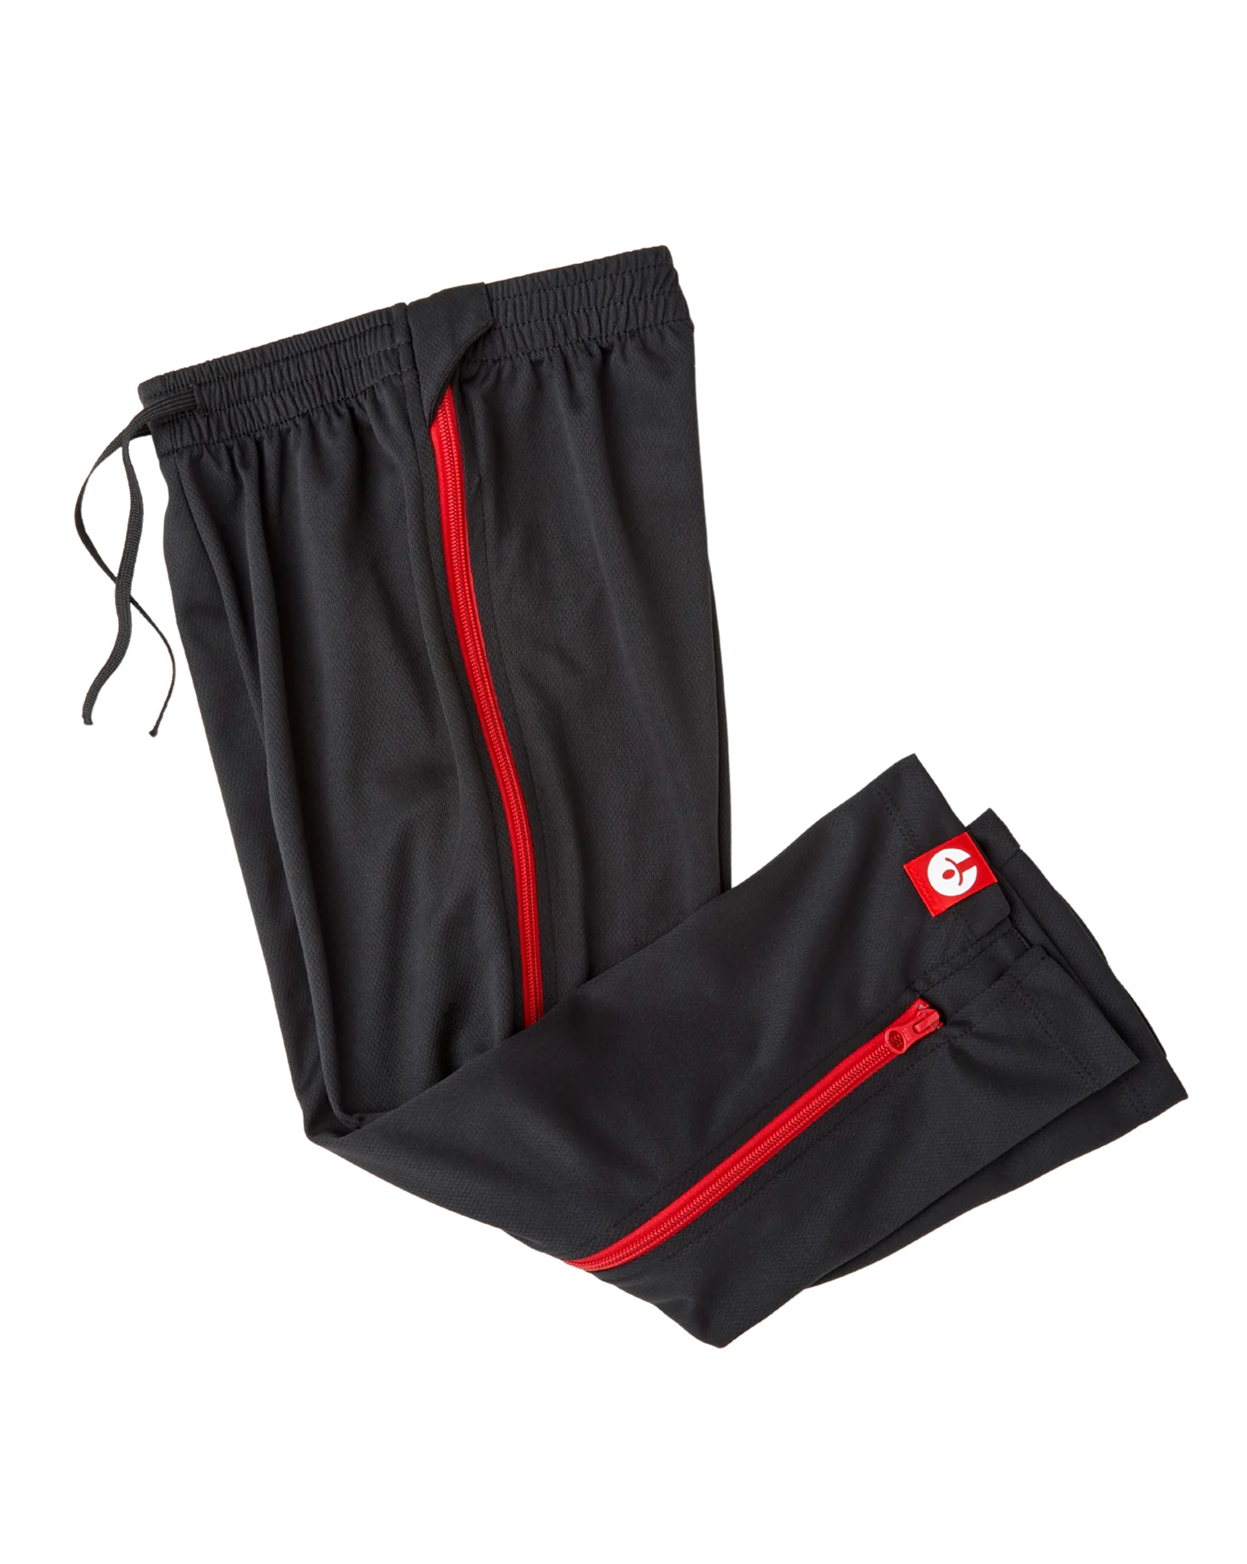 zipOns Youth Lightweight Adaptive Pants